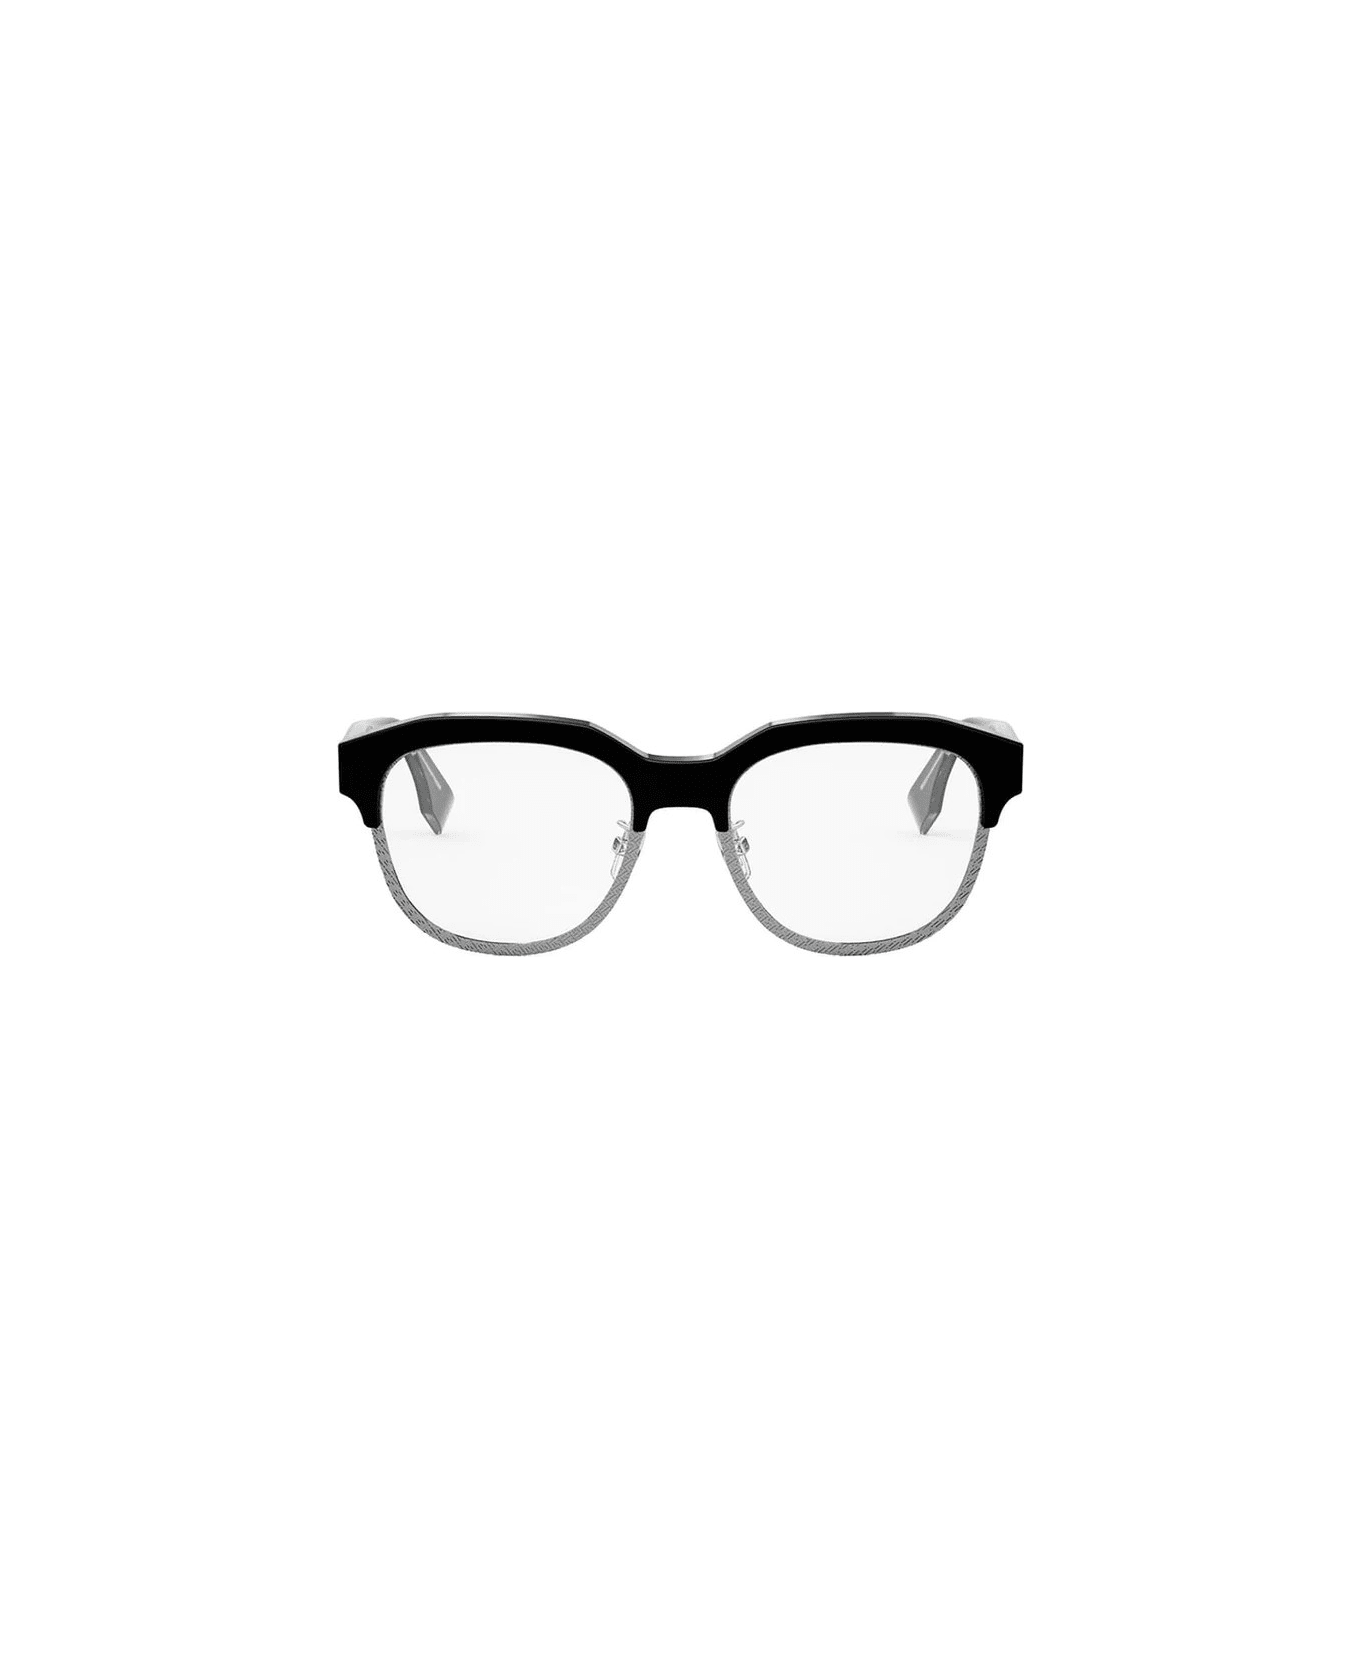 Fendi Eyewear FE50068u 001 Glasses アイウェア